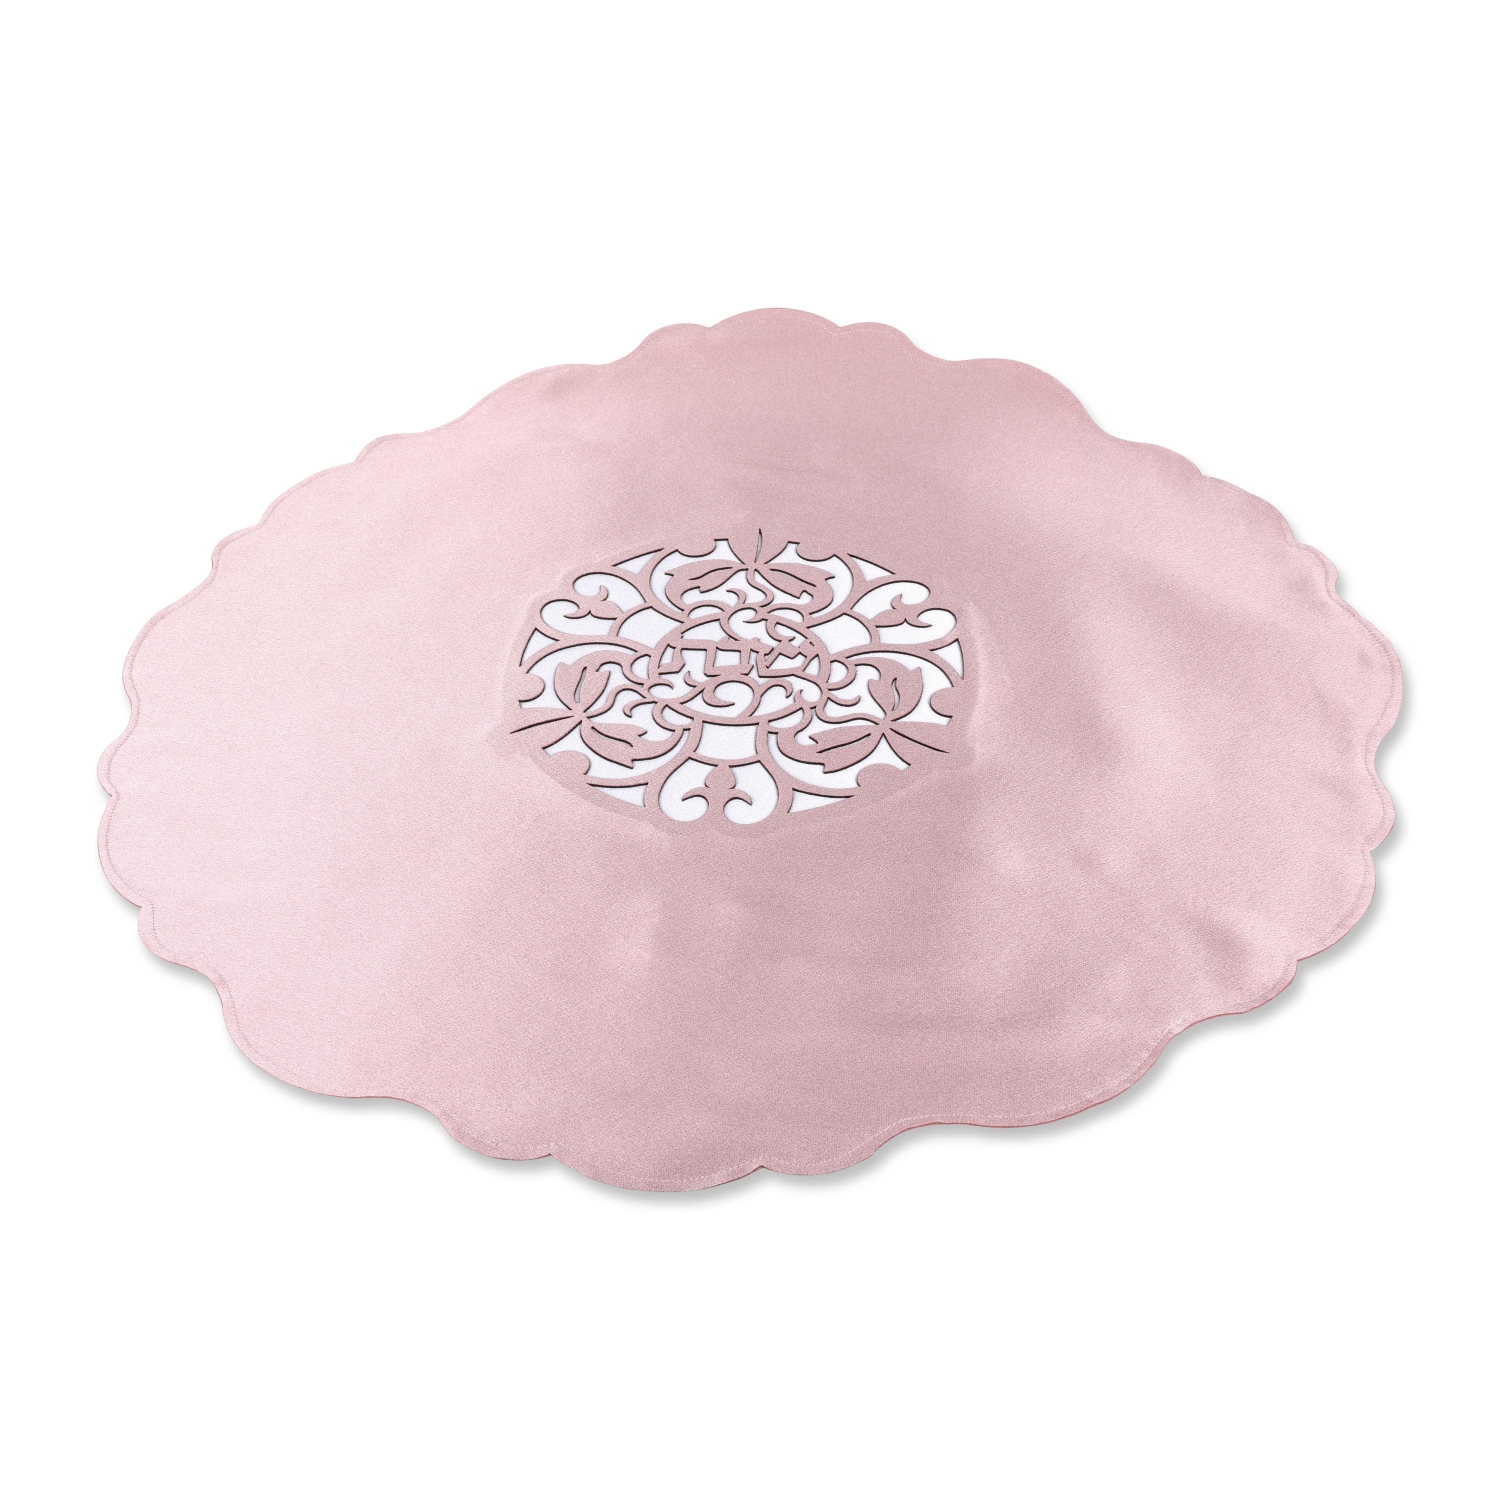 Avi Luvaton Blooming Challah Cover - Pink - 1